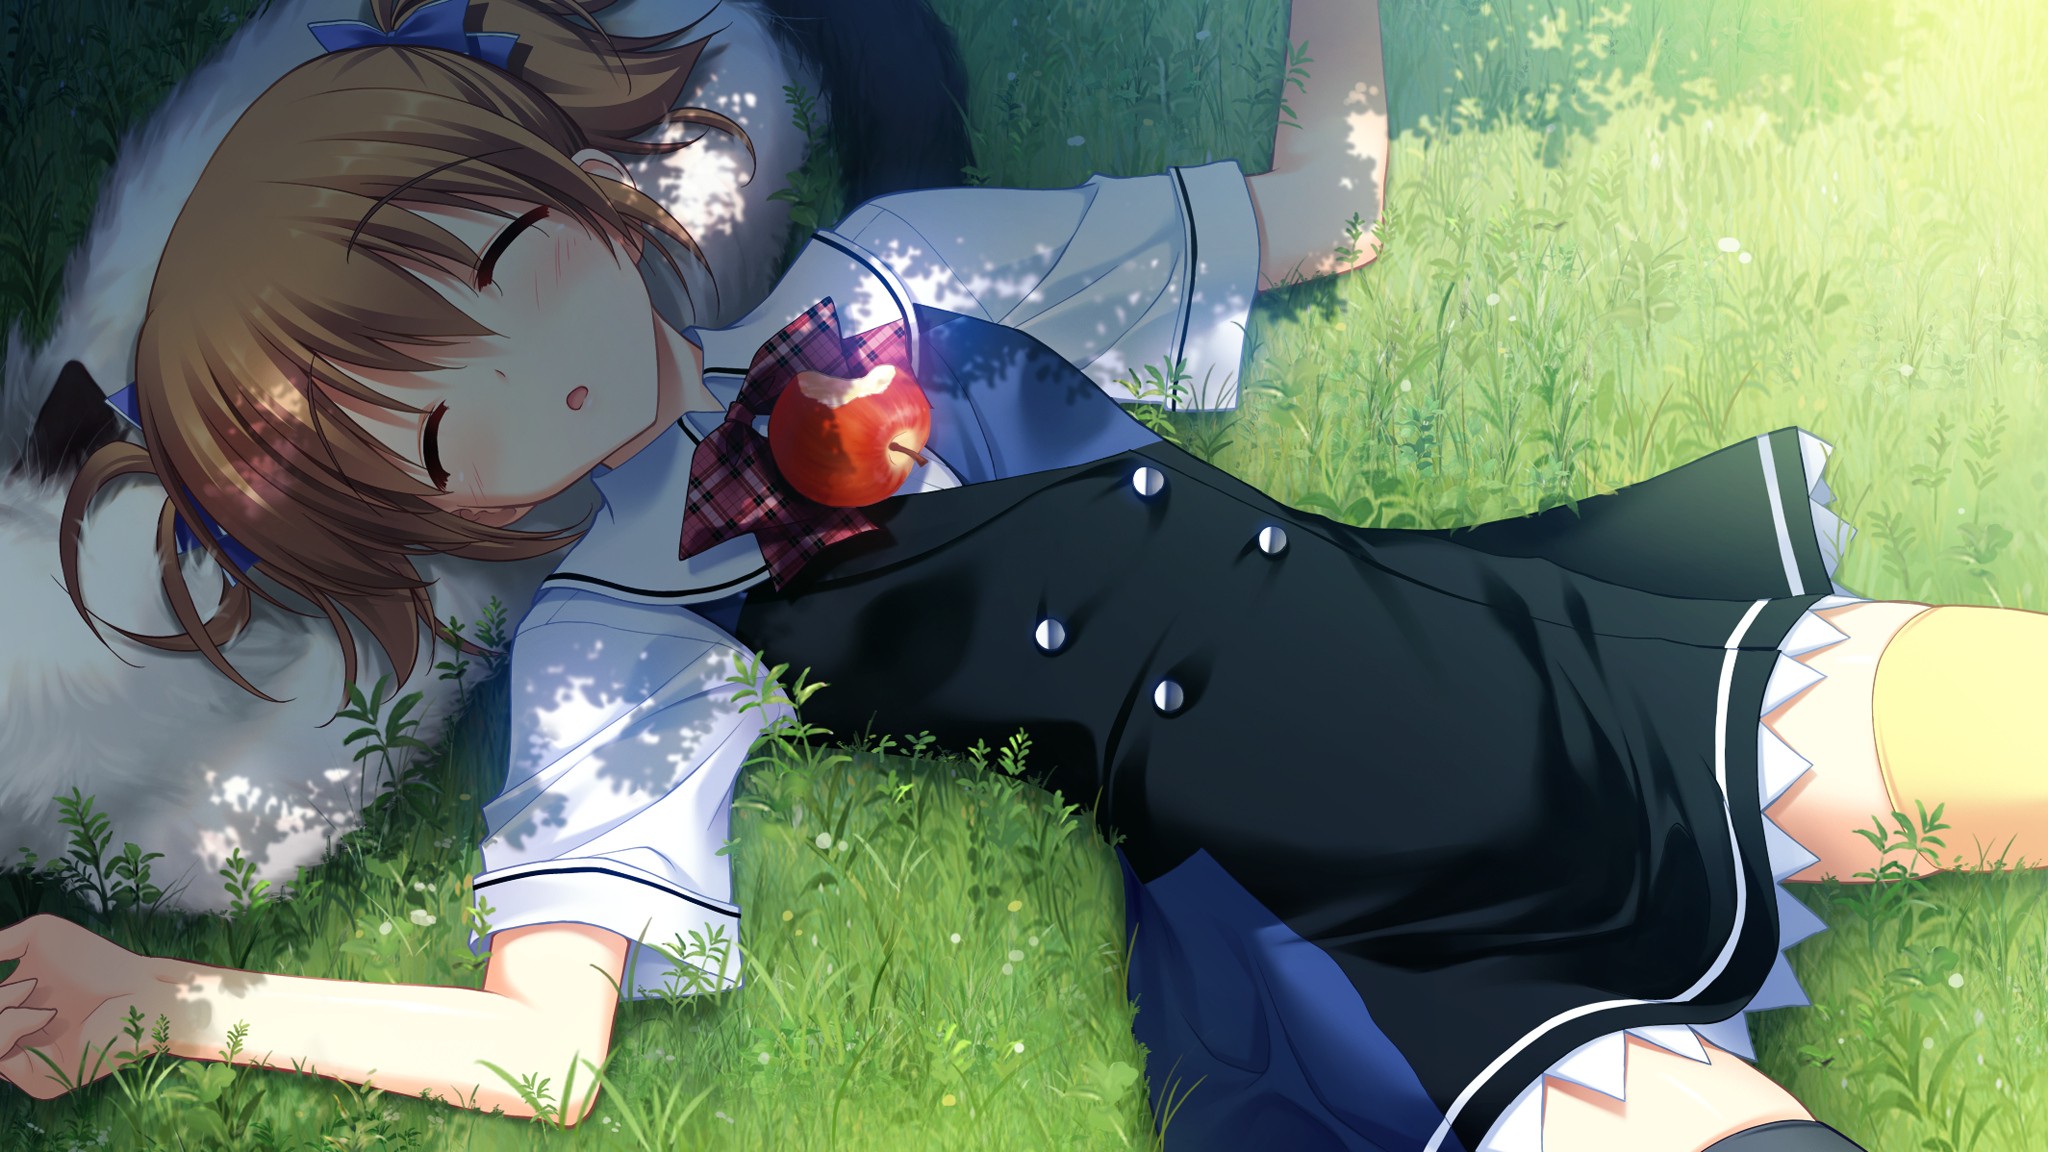 Anime 2048x1152 Irisu Makina Grisaia no Kajitsu schoolgirl anime anime girls food fruit apples brunette sleeping grass women outdoors lying on back closed eyes